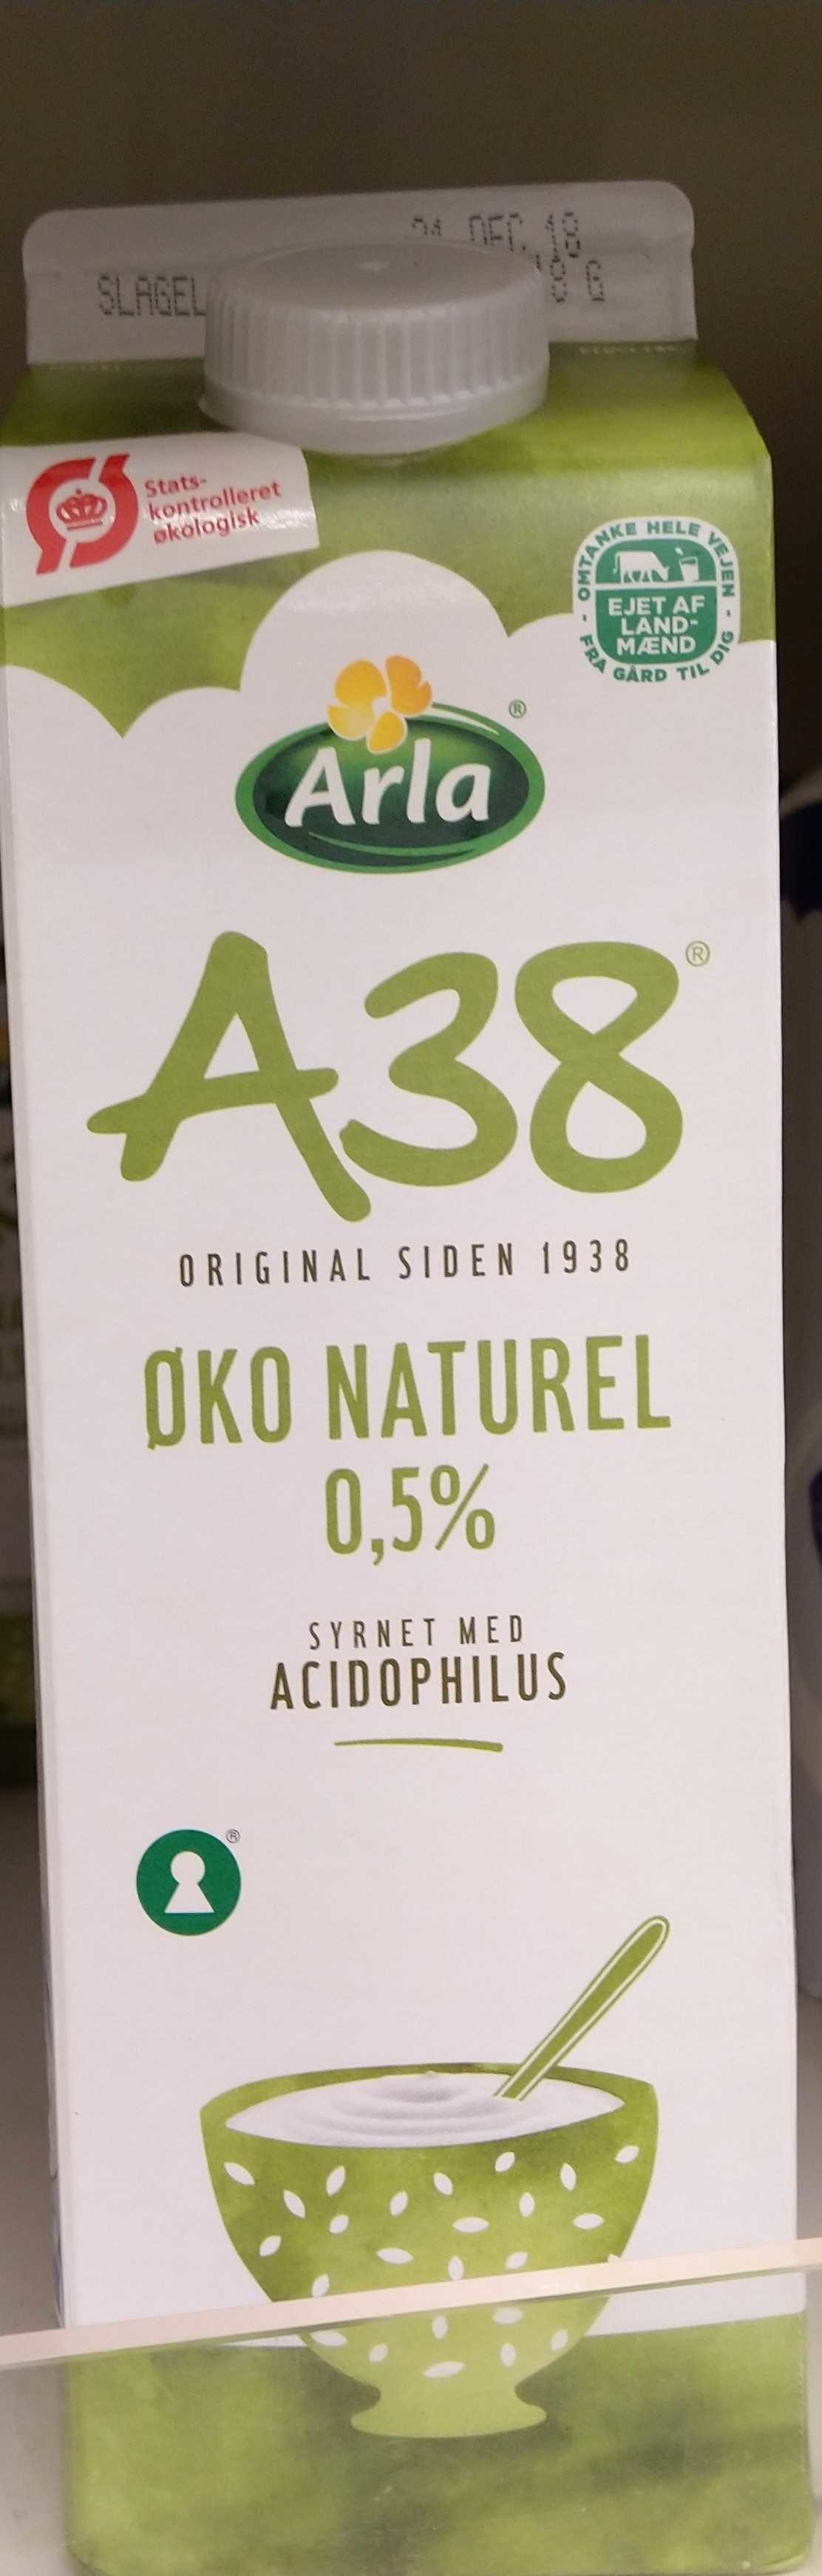 A38 øko naturel 0.5% - Product - en